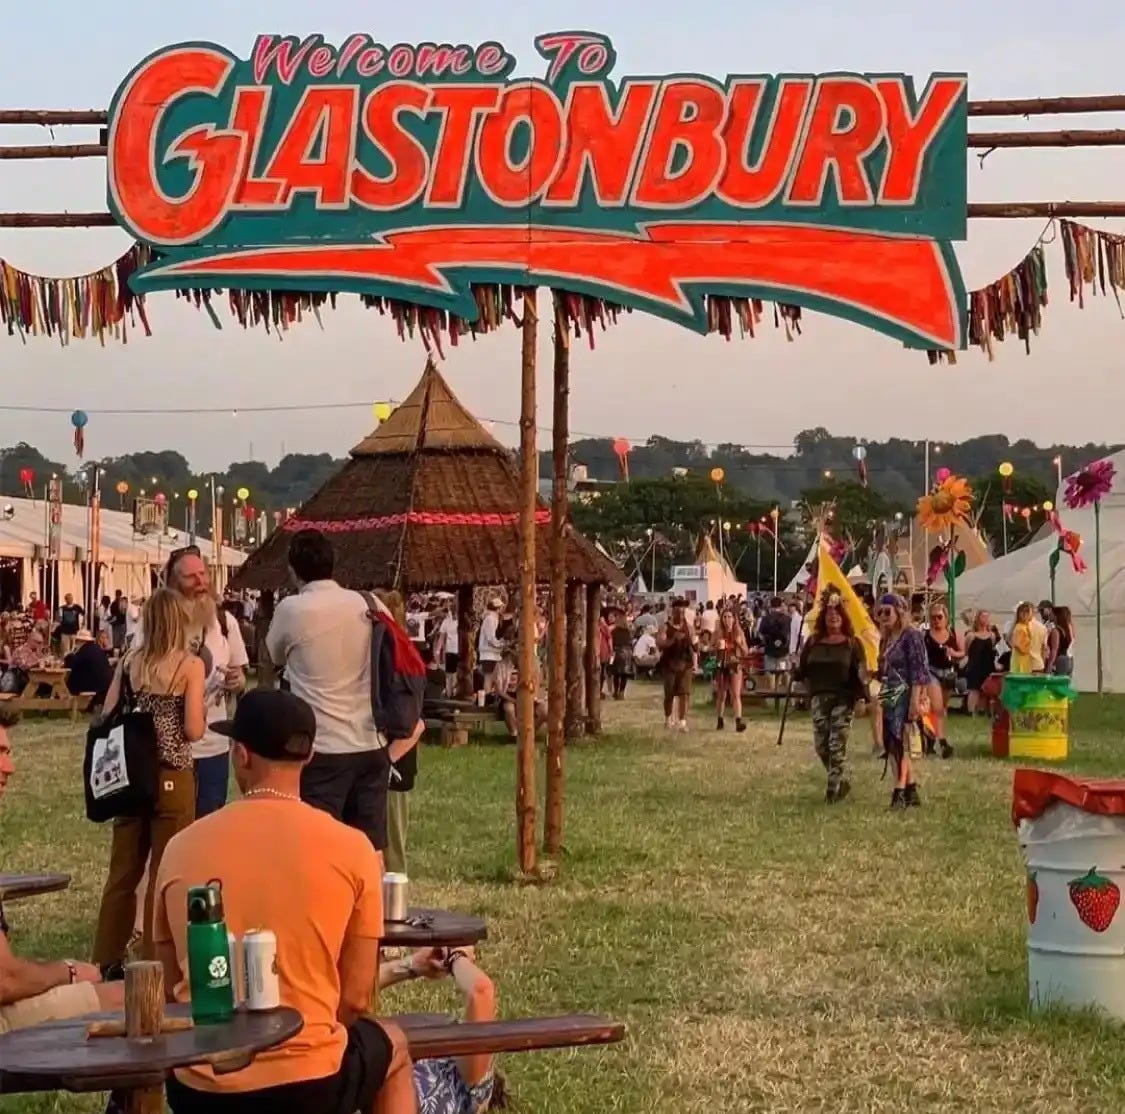 Glastonbury Music Festival | Helicopter To Glastonbury